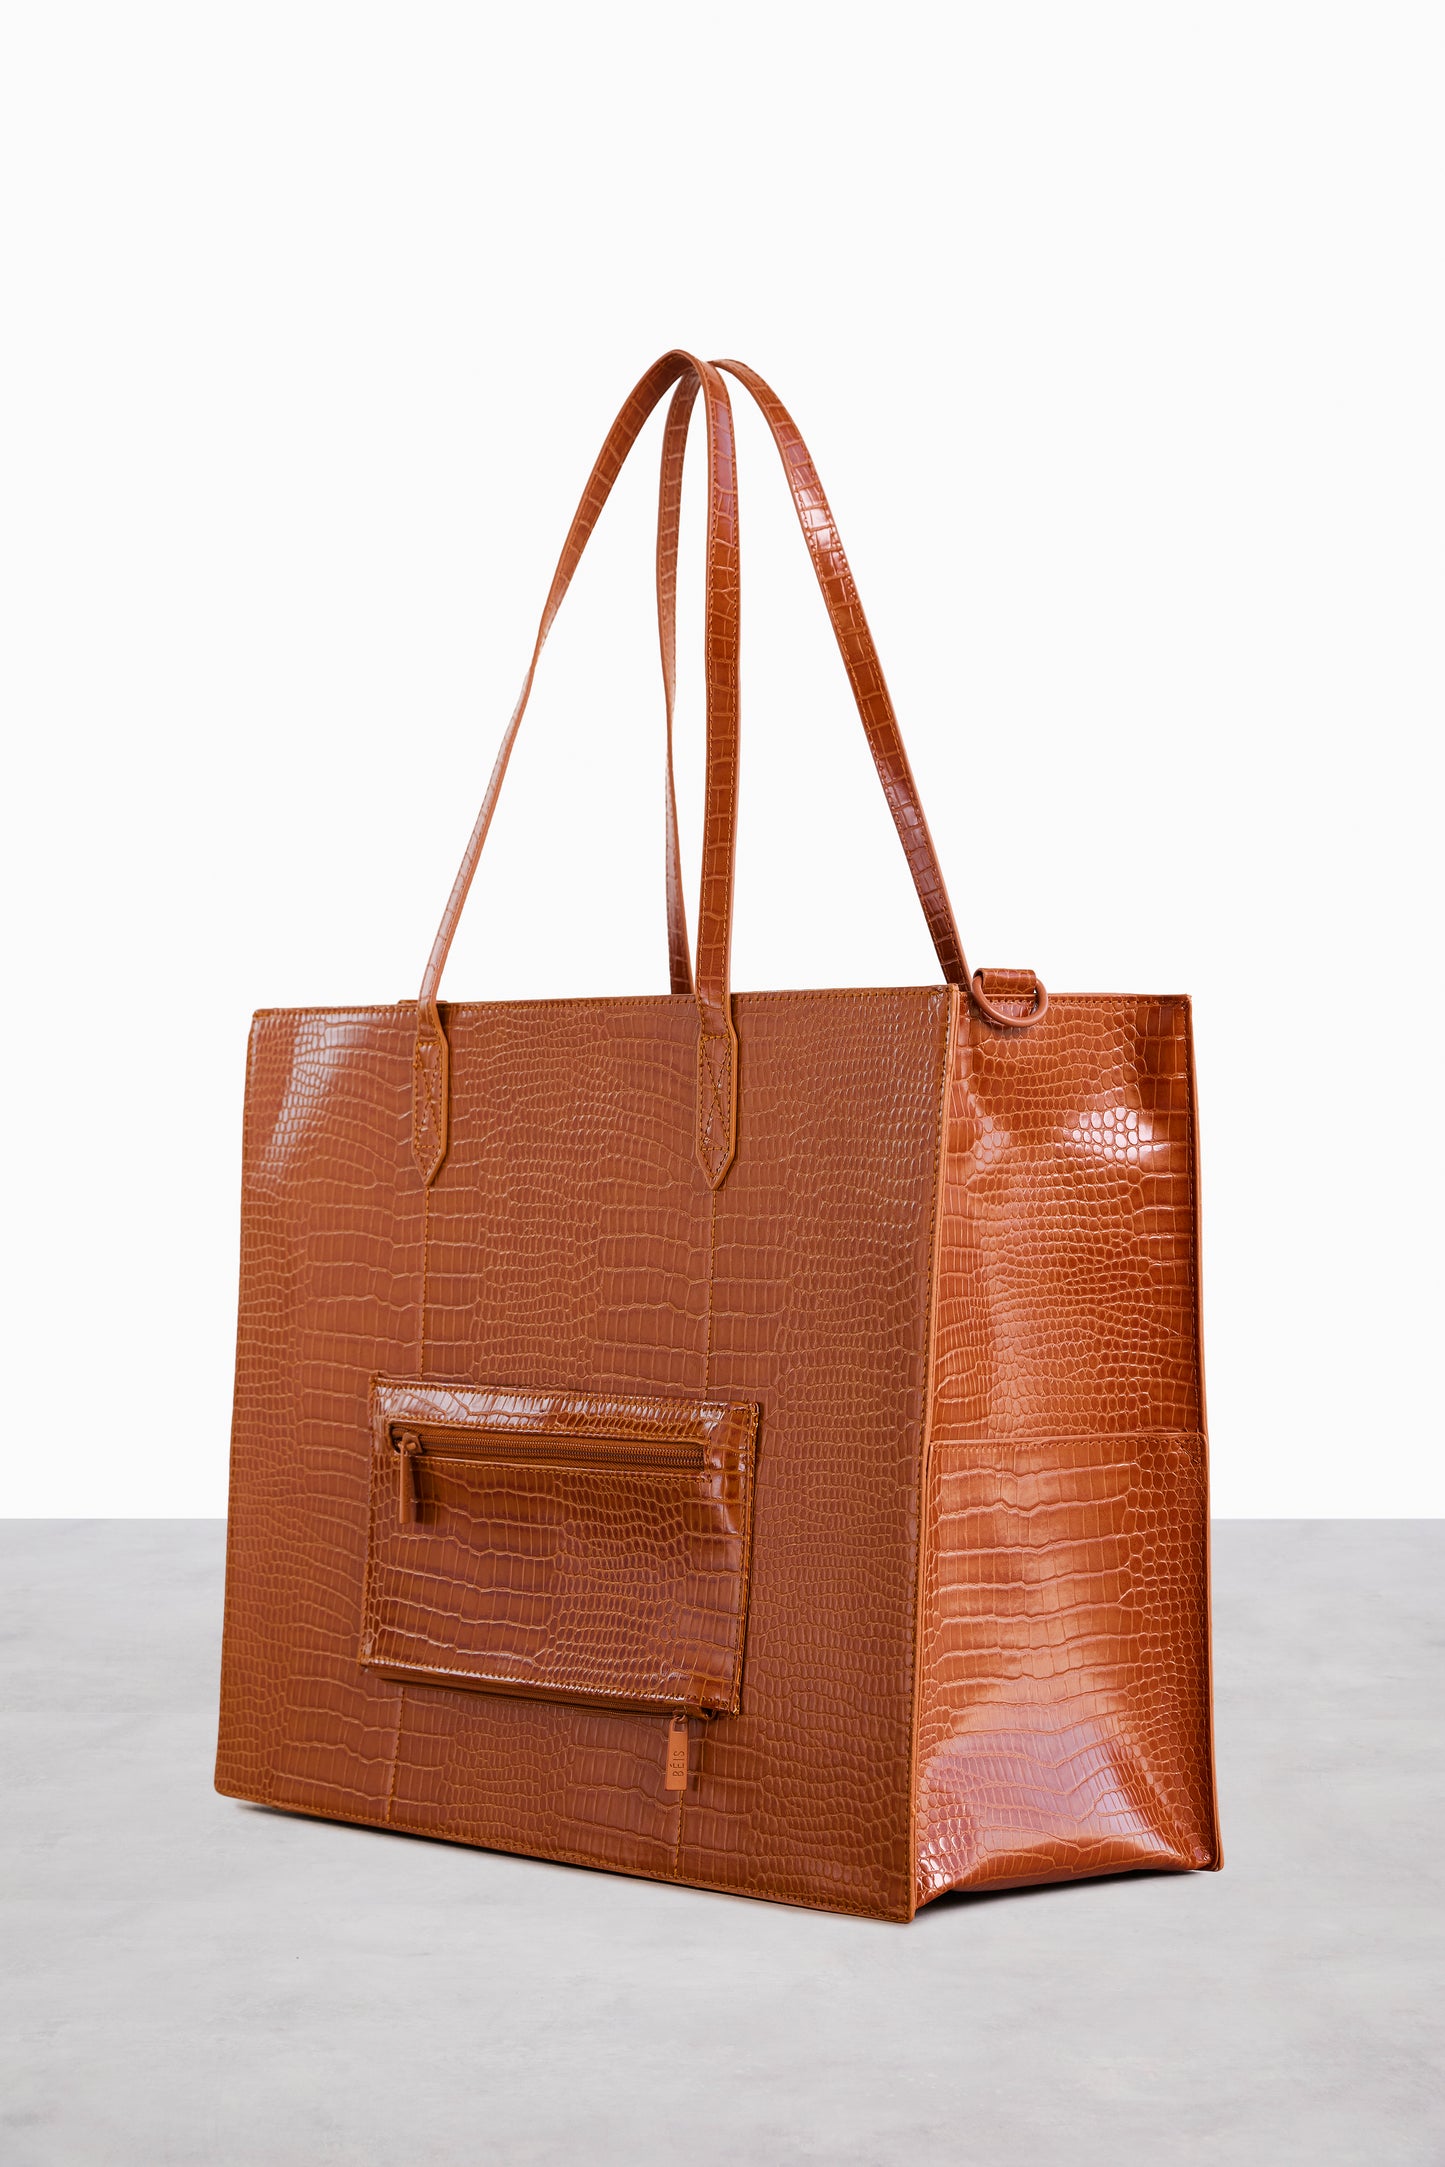 Oversize Cognac Brown Leather Tote Bag Shopper Bag Love 